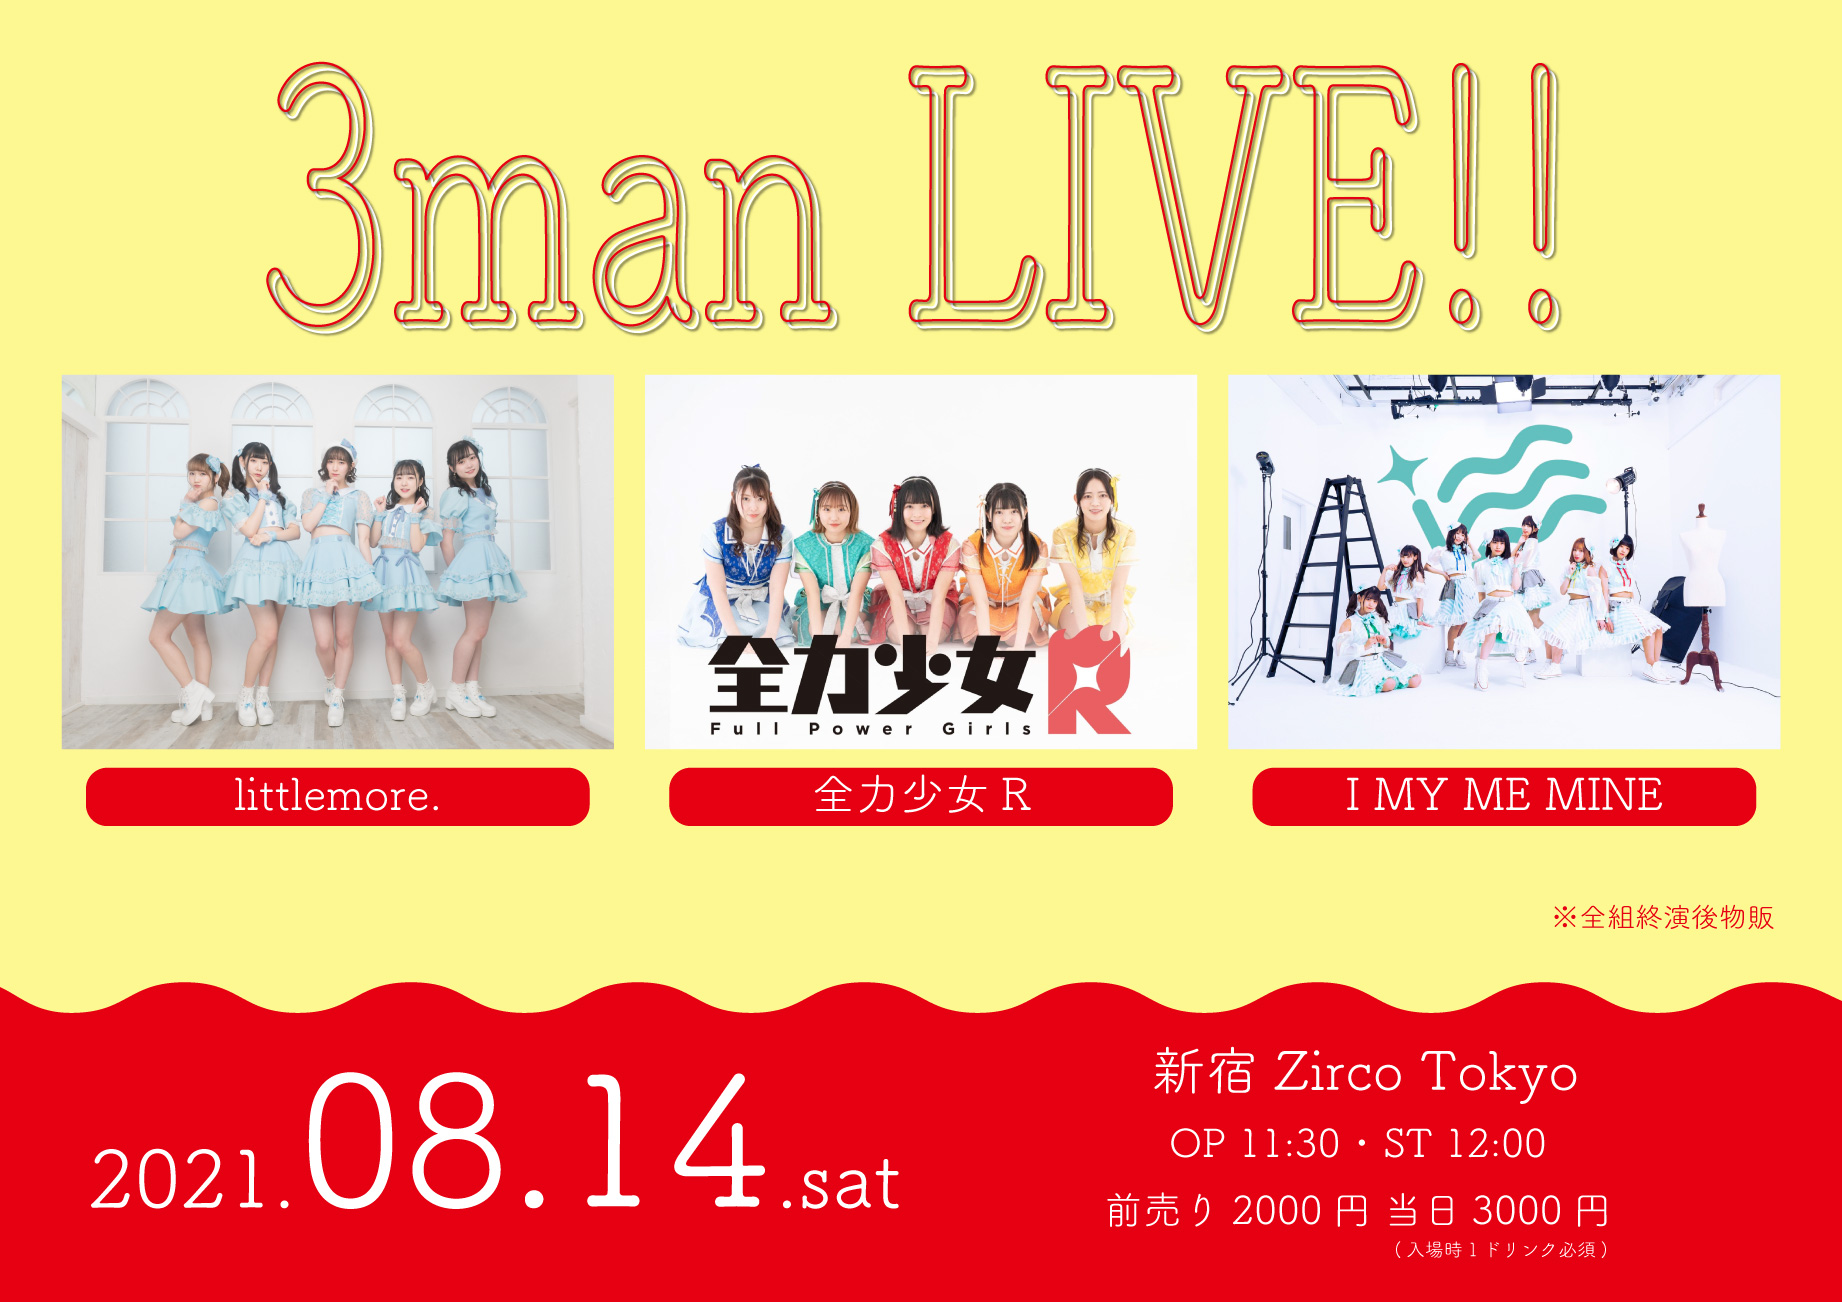 8/14(土) littlemore. × 全力少女R × I MY ME MINE 3man Live!!